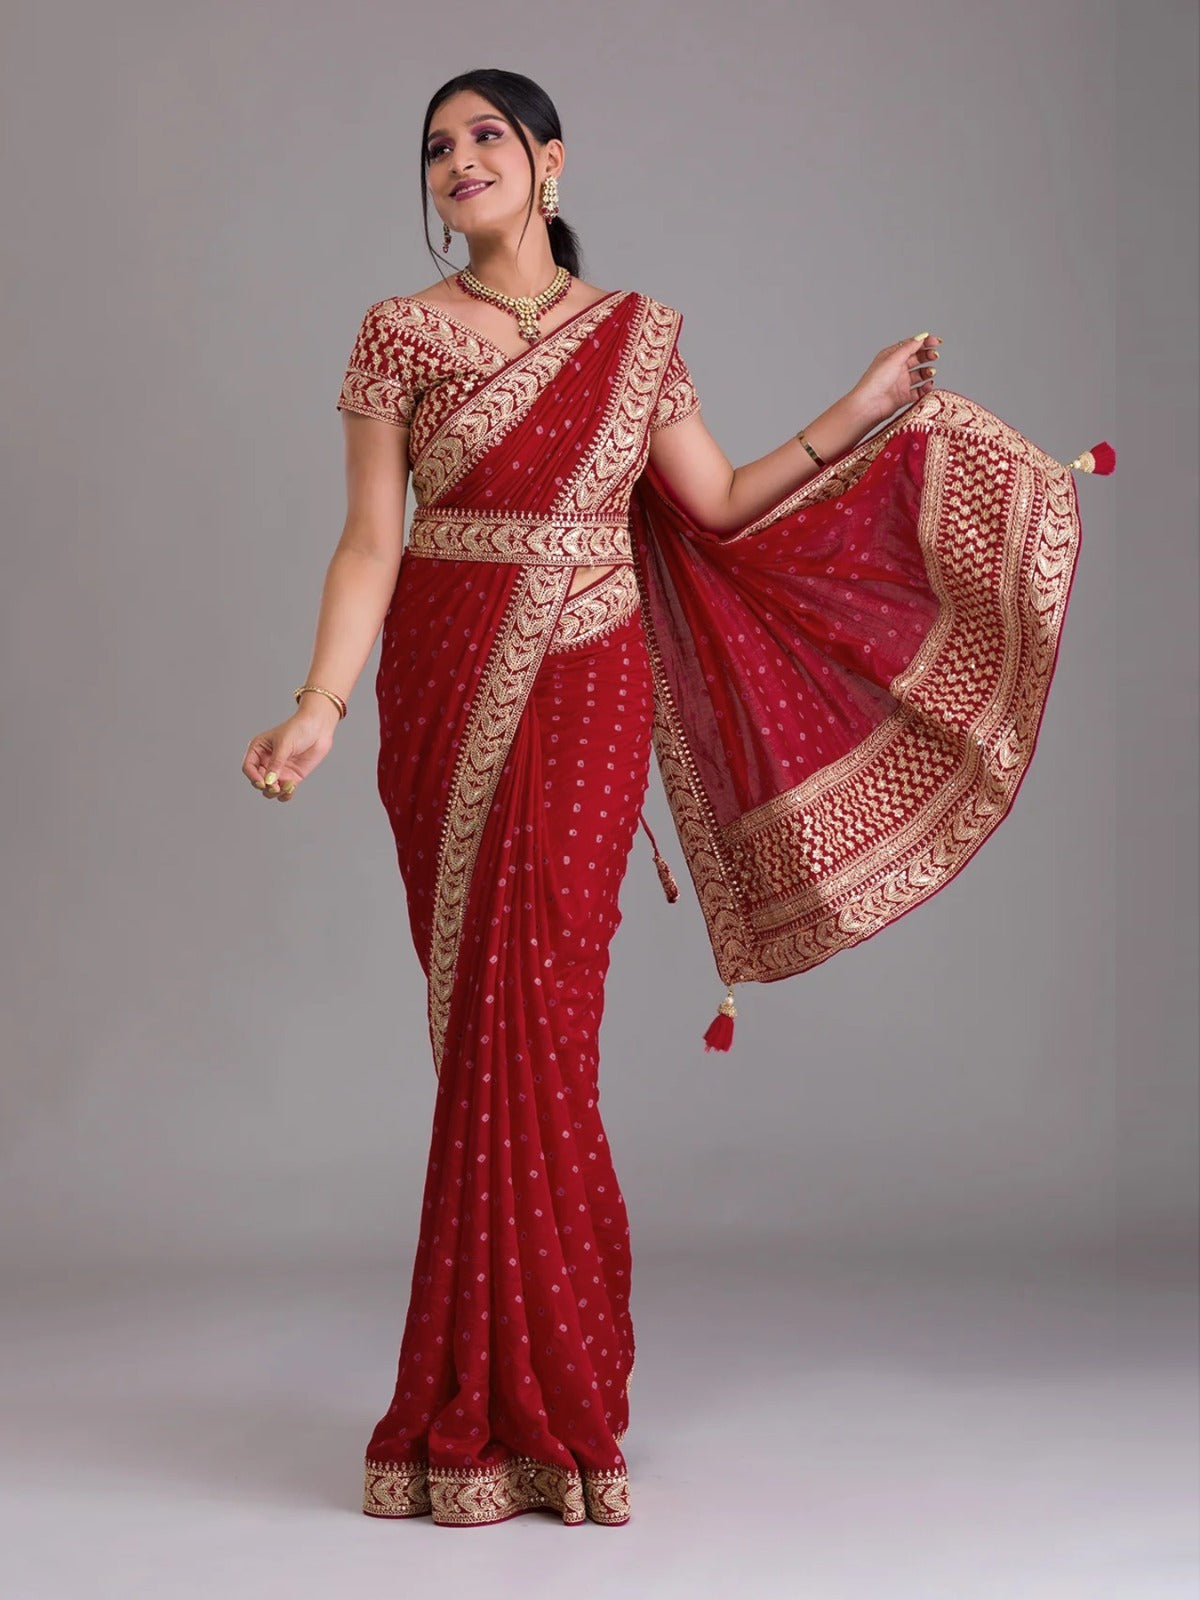 Katrina Kaif in Red Designer Sarees | Zeenat